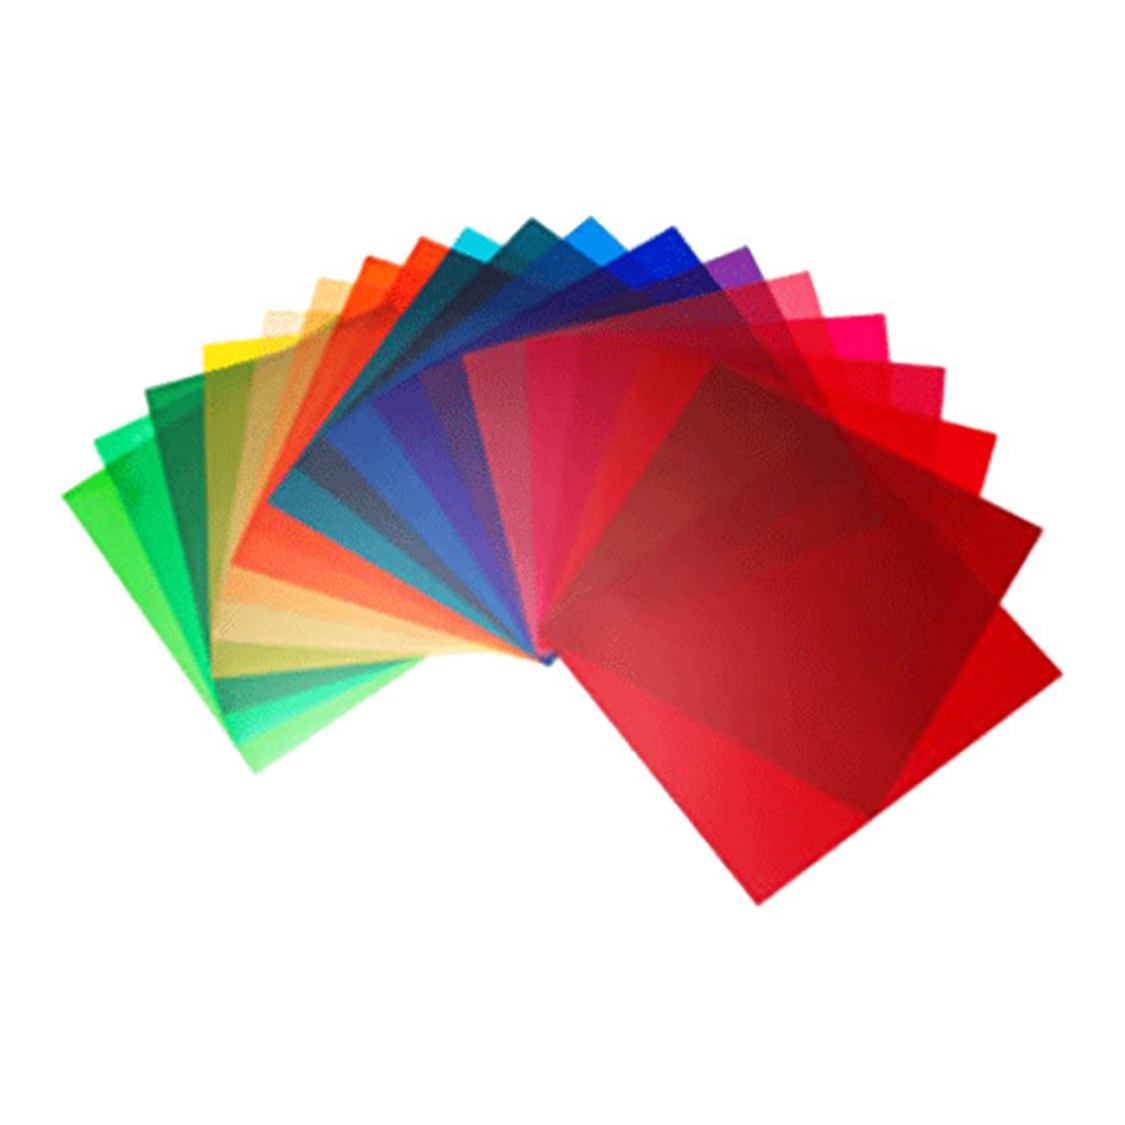 Elinchrom Colour Filter Set of 20 (21cm x 21cm)